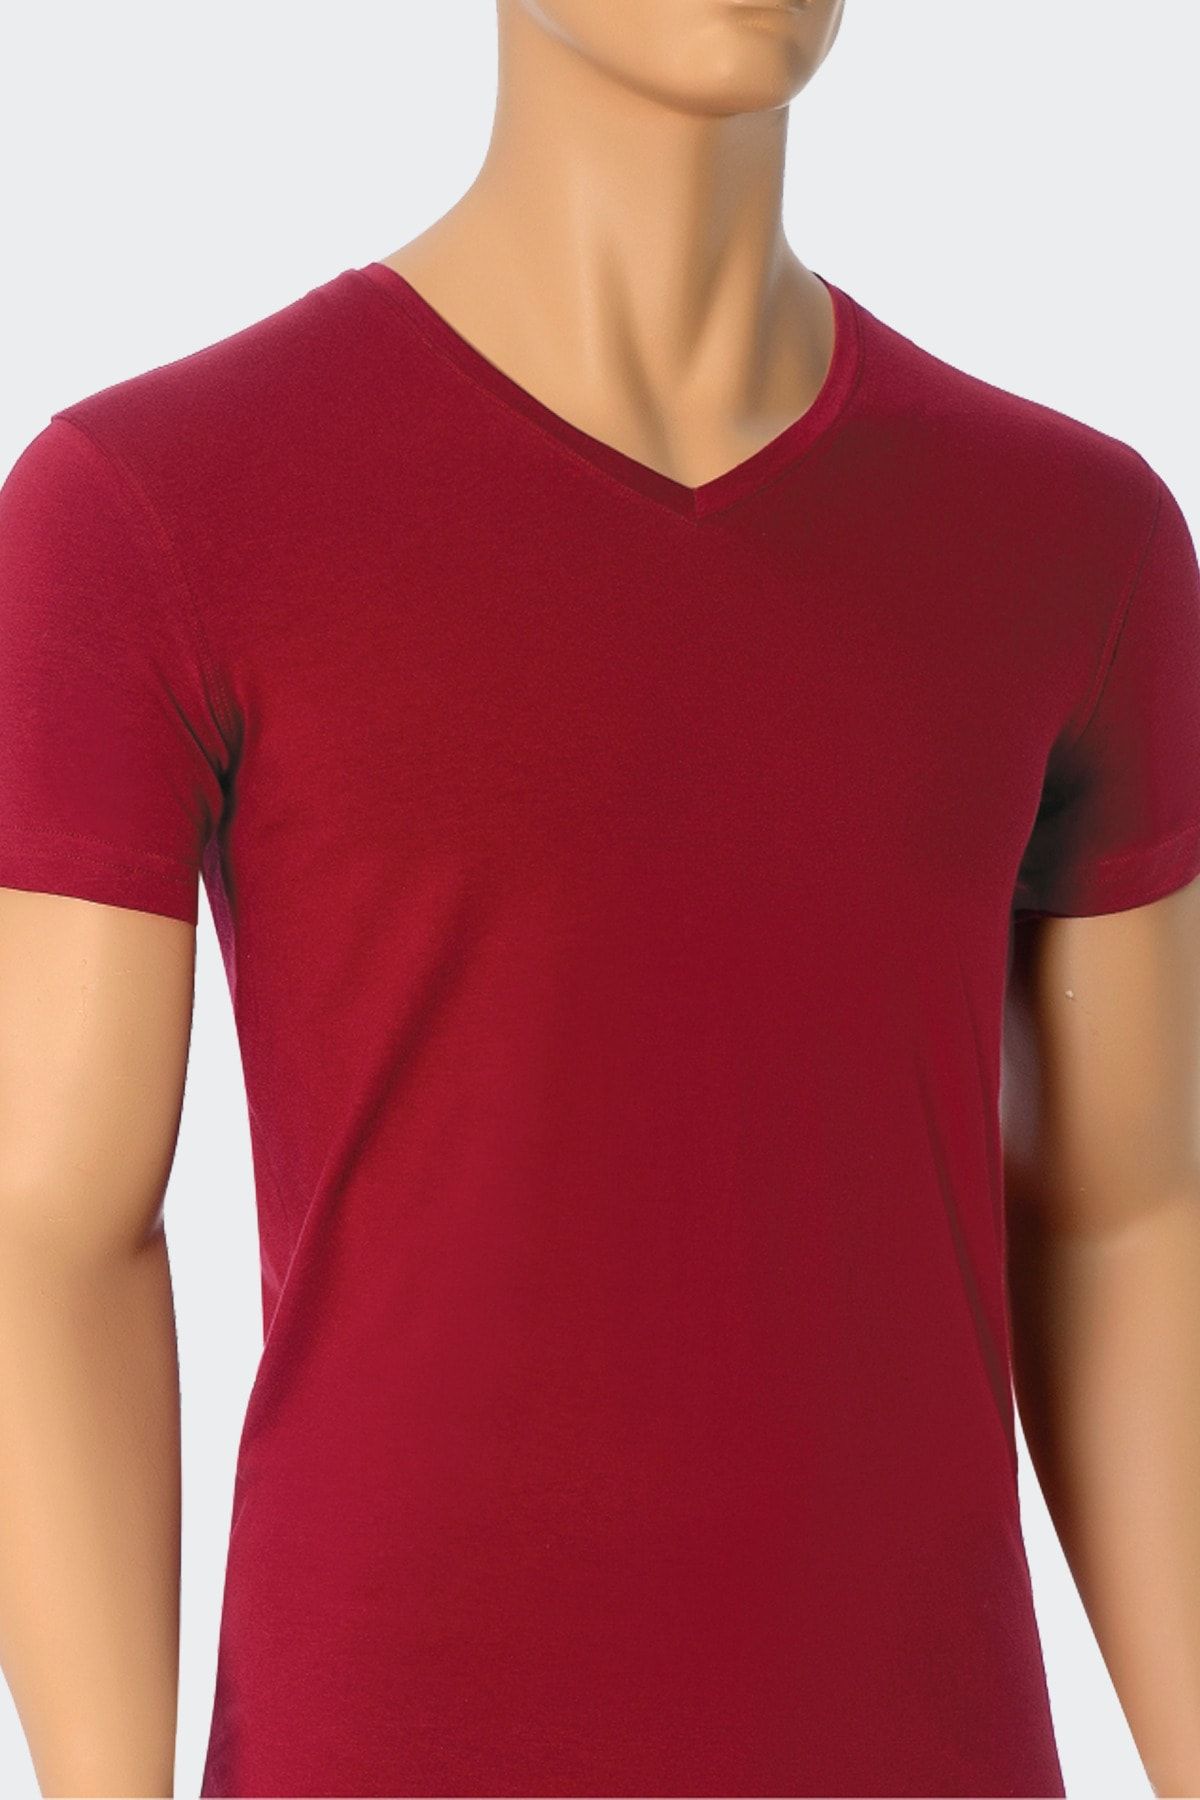 Öts 2'li Erkek Modal V Yaka T-shirt Kırmızı